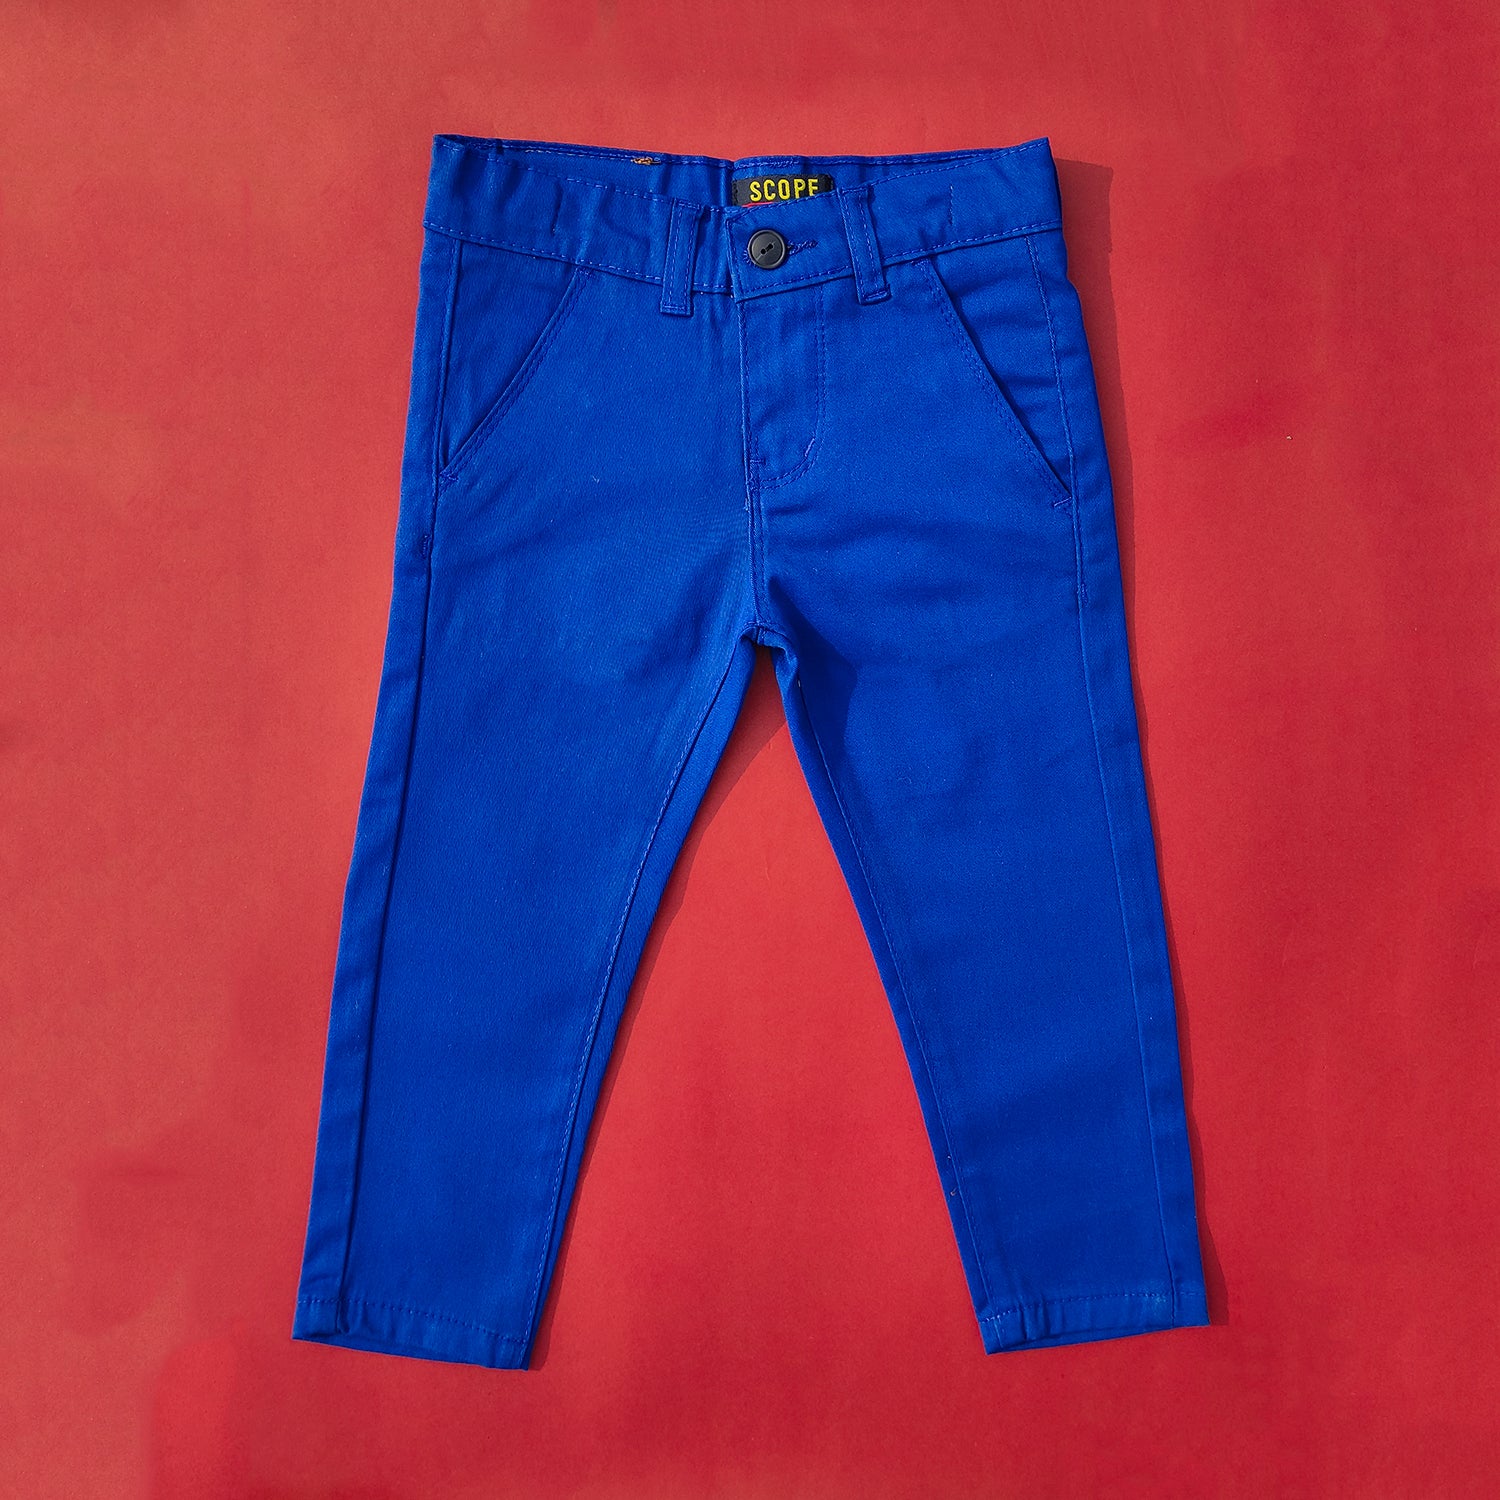 Blue Pants With Pocket Detailing